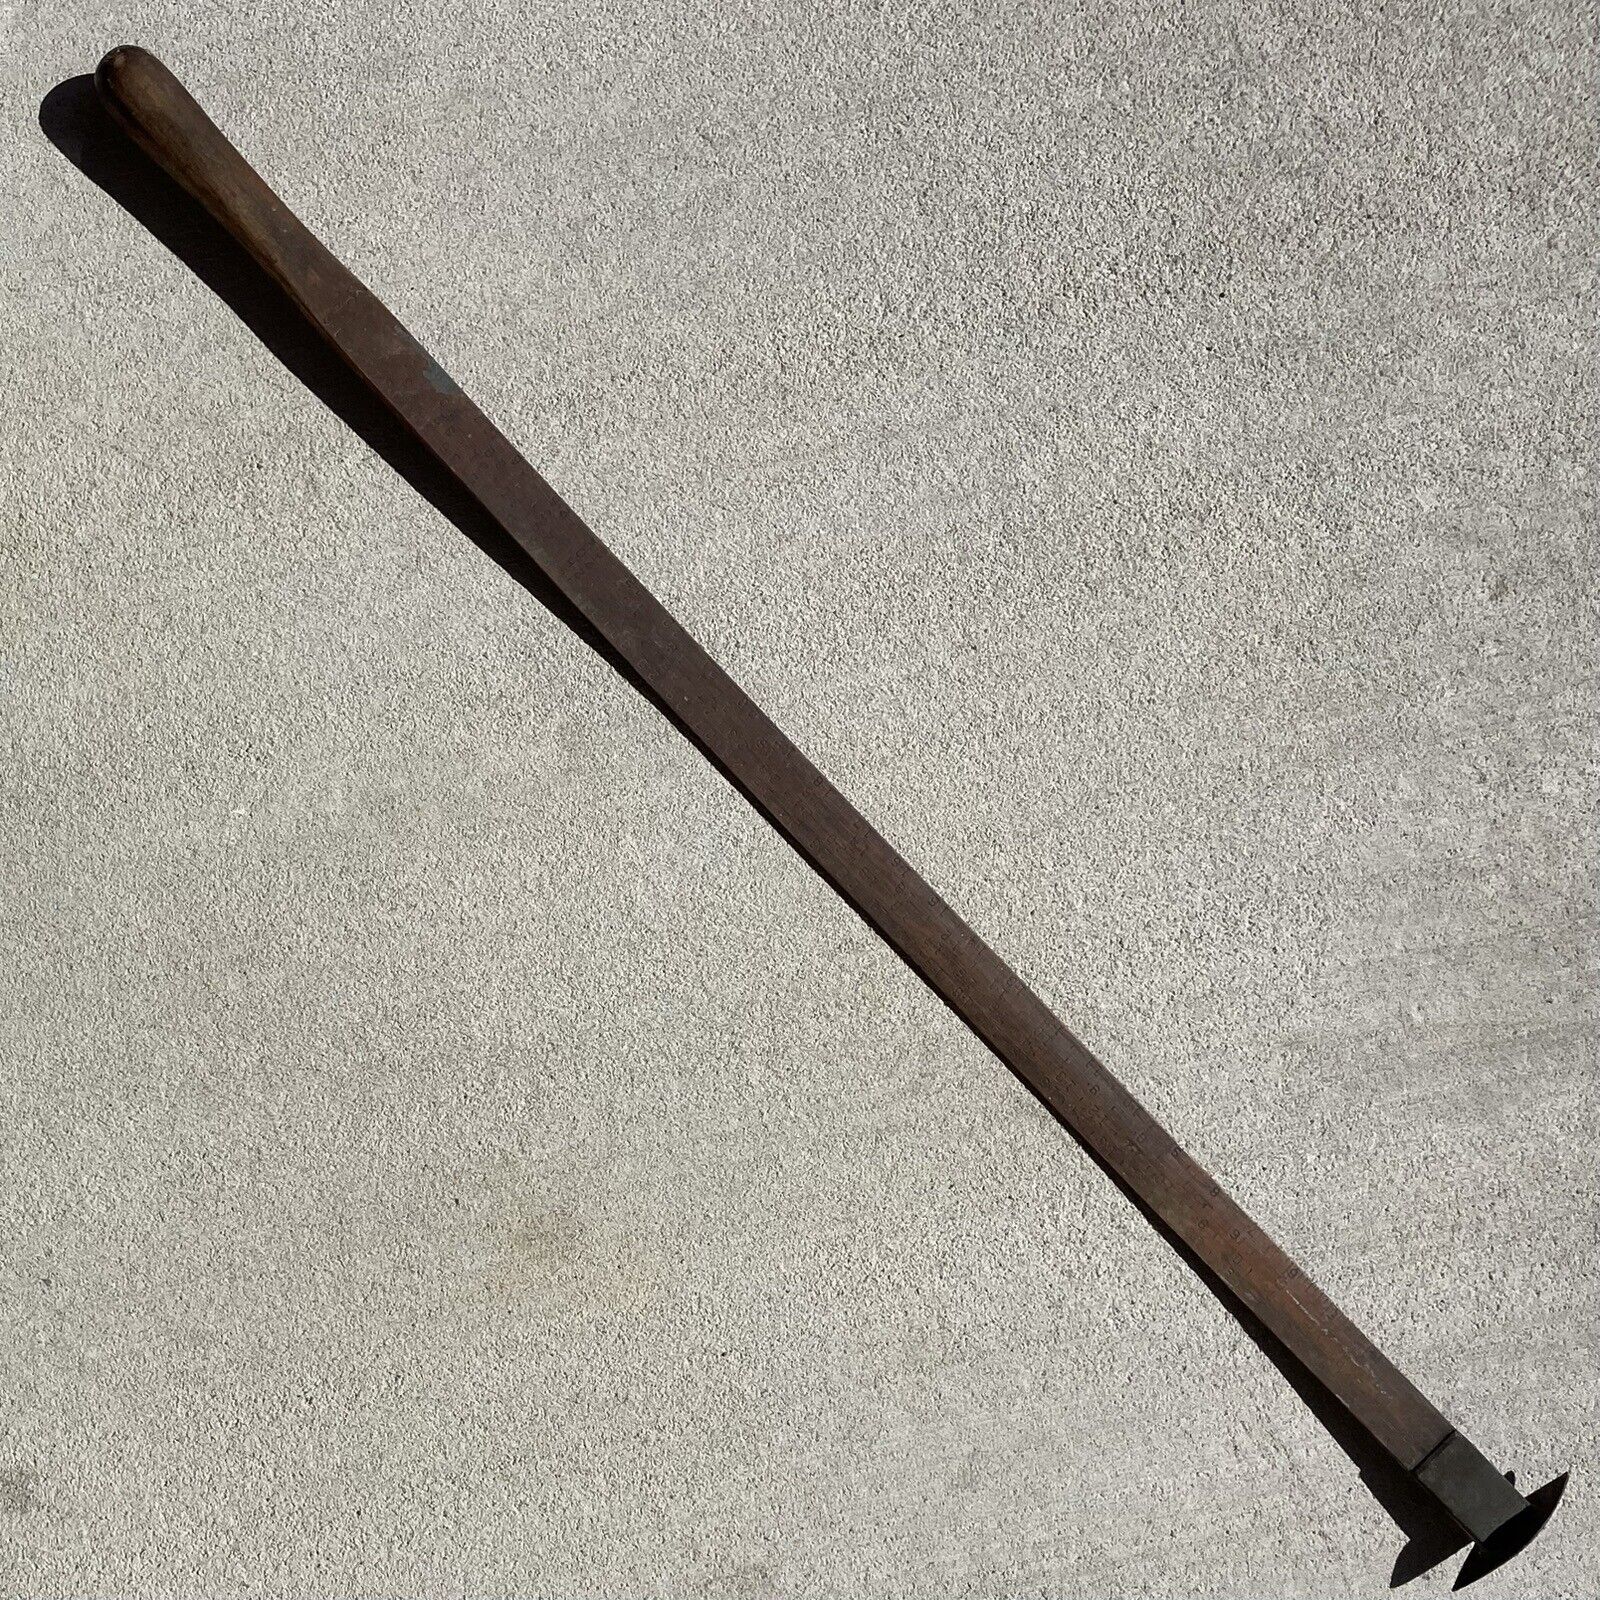 Antique Lumber Scale Stick 36” Long.  Logging Measuring Stick.